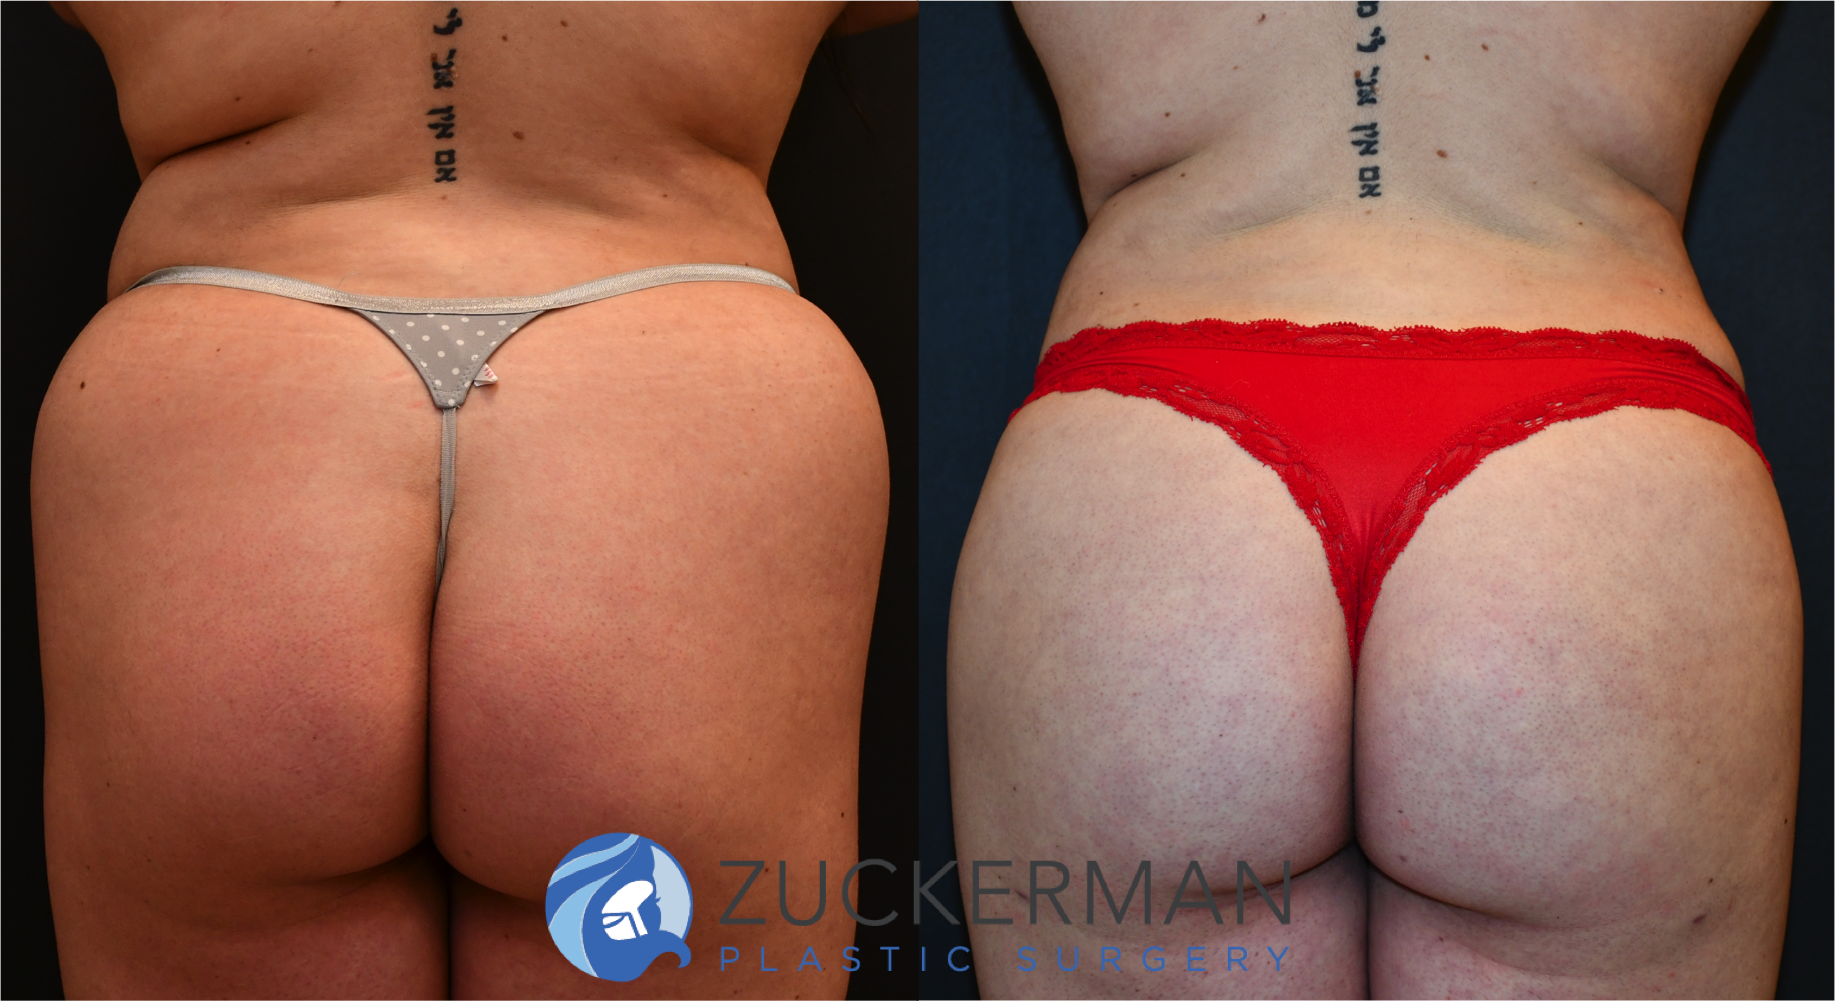 brazilian butt lift, bbl, buttock augmentation, 7, before and after, joshua zuckerman, posterior view